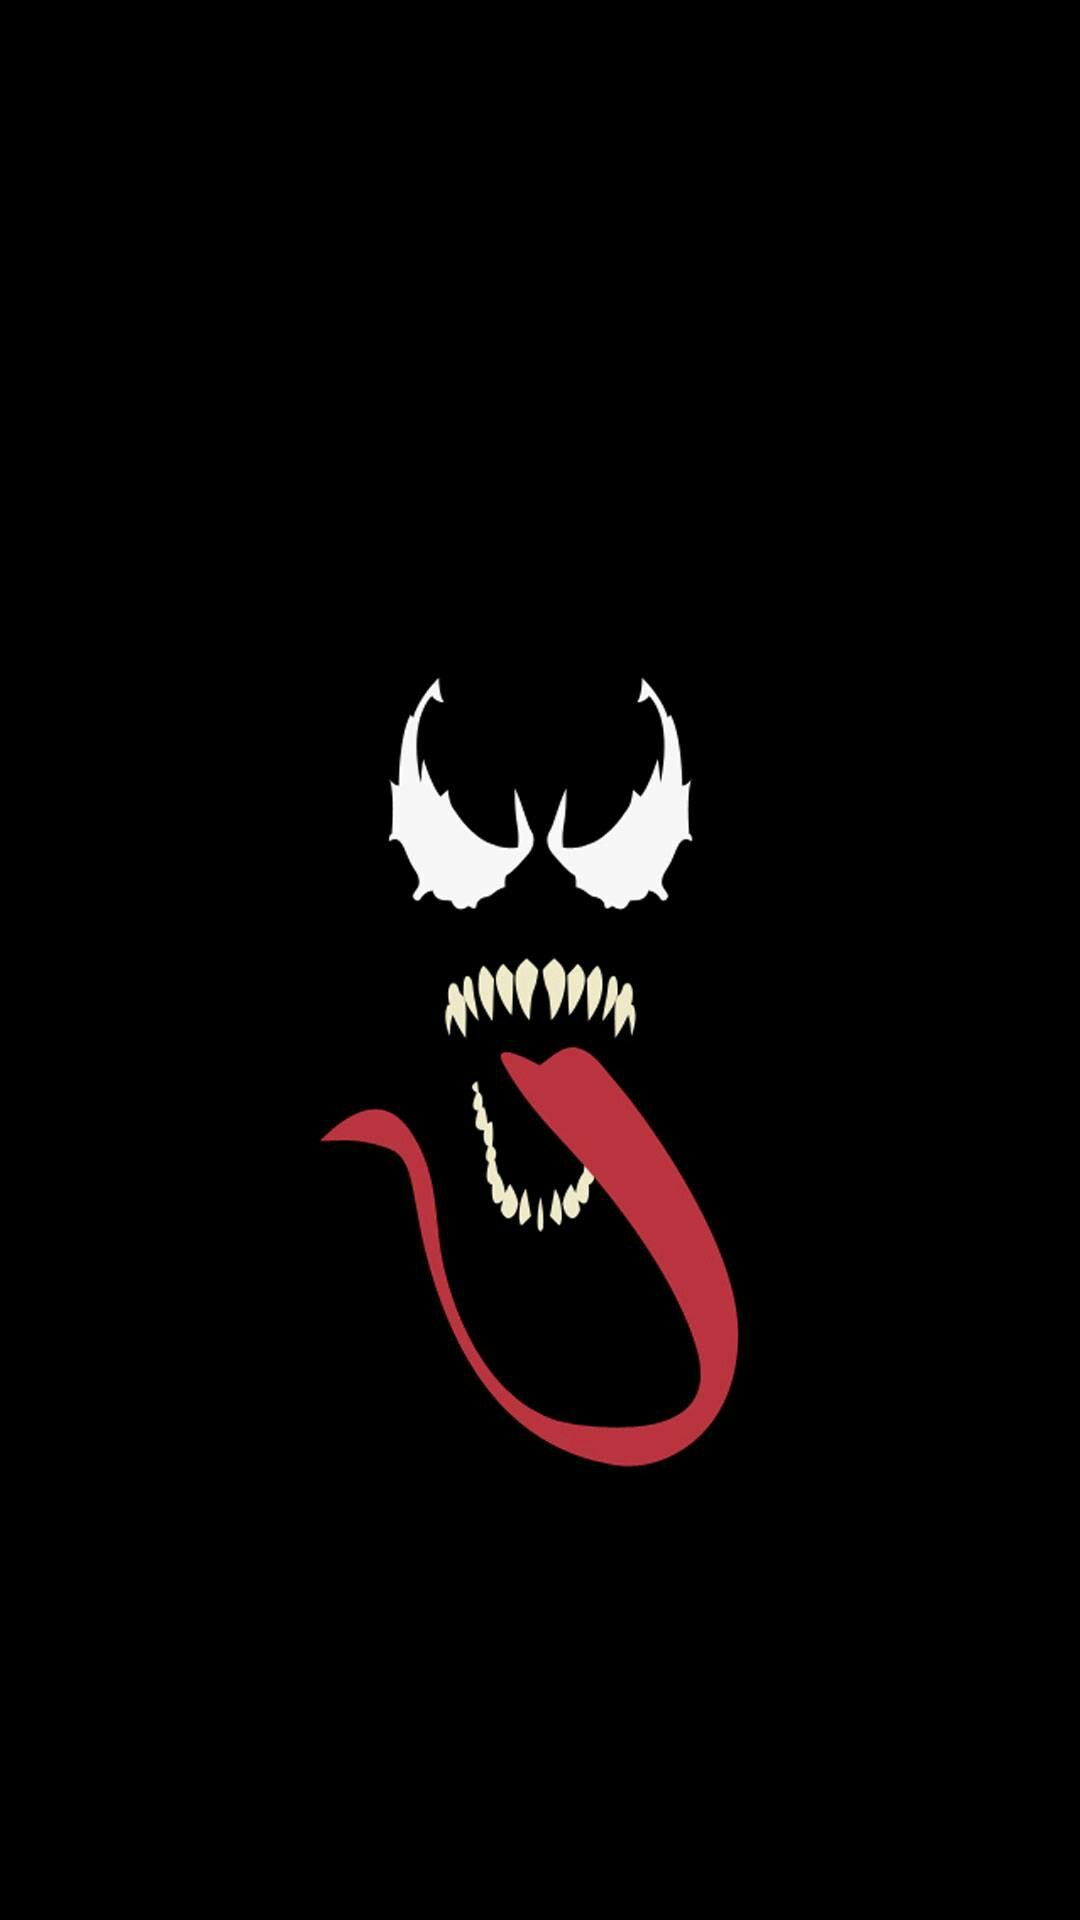 Venom Logo Phone Wallpaper Free .wallpaperaccess.com